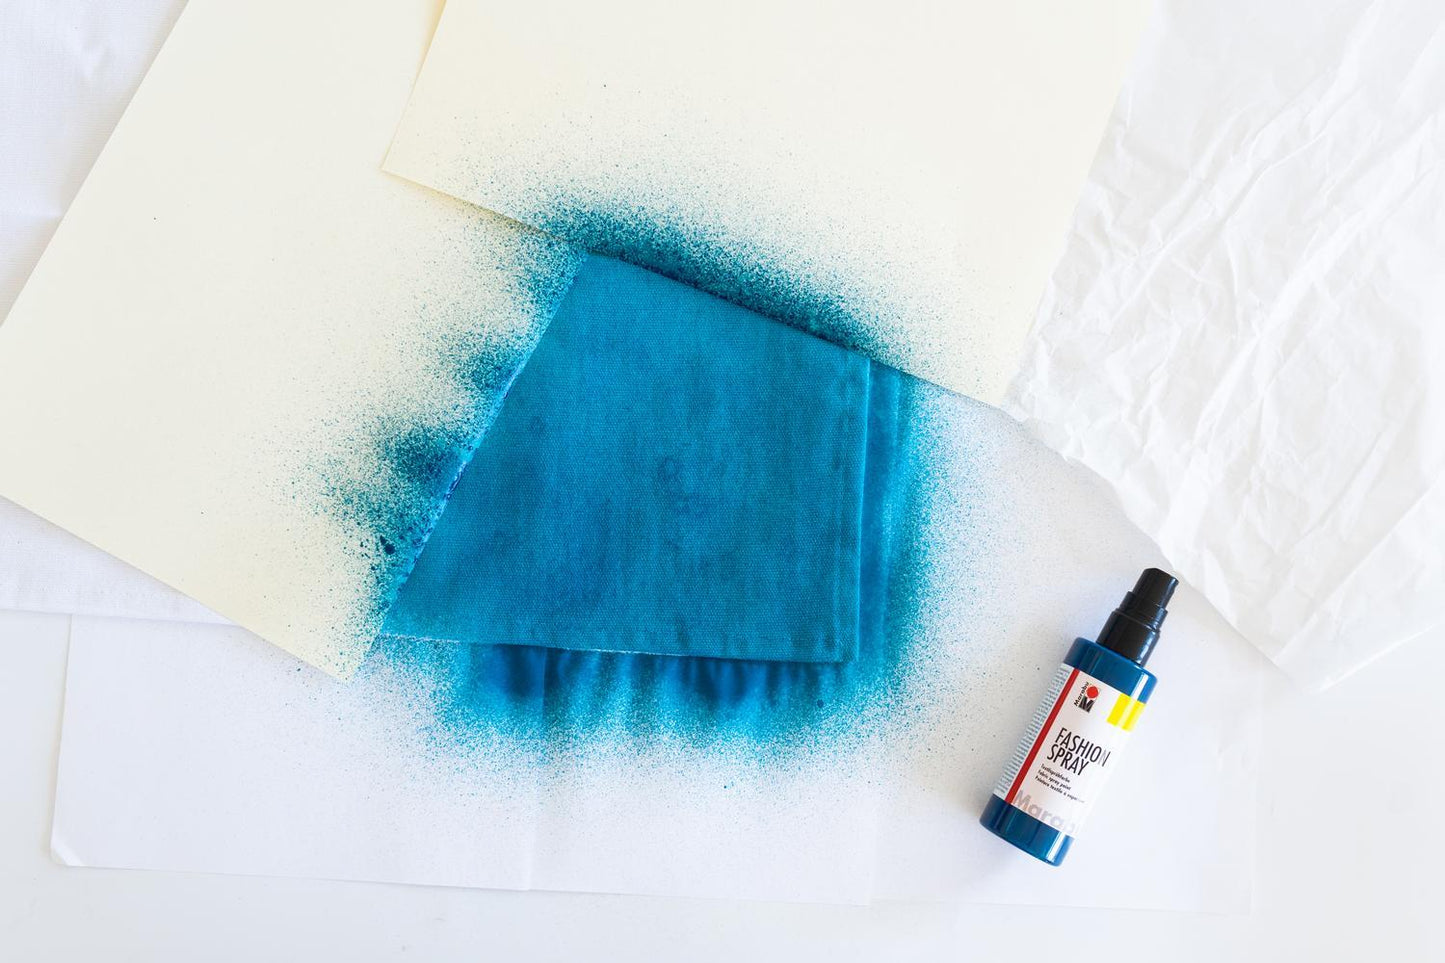 Textilsprayfärg: Textilfärg, sprayflaska Marabu Fashion Spray, 100ml, Caribbean, ljusblå (091)